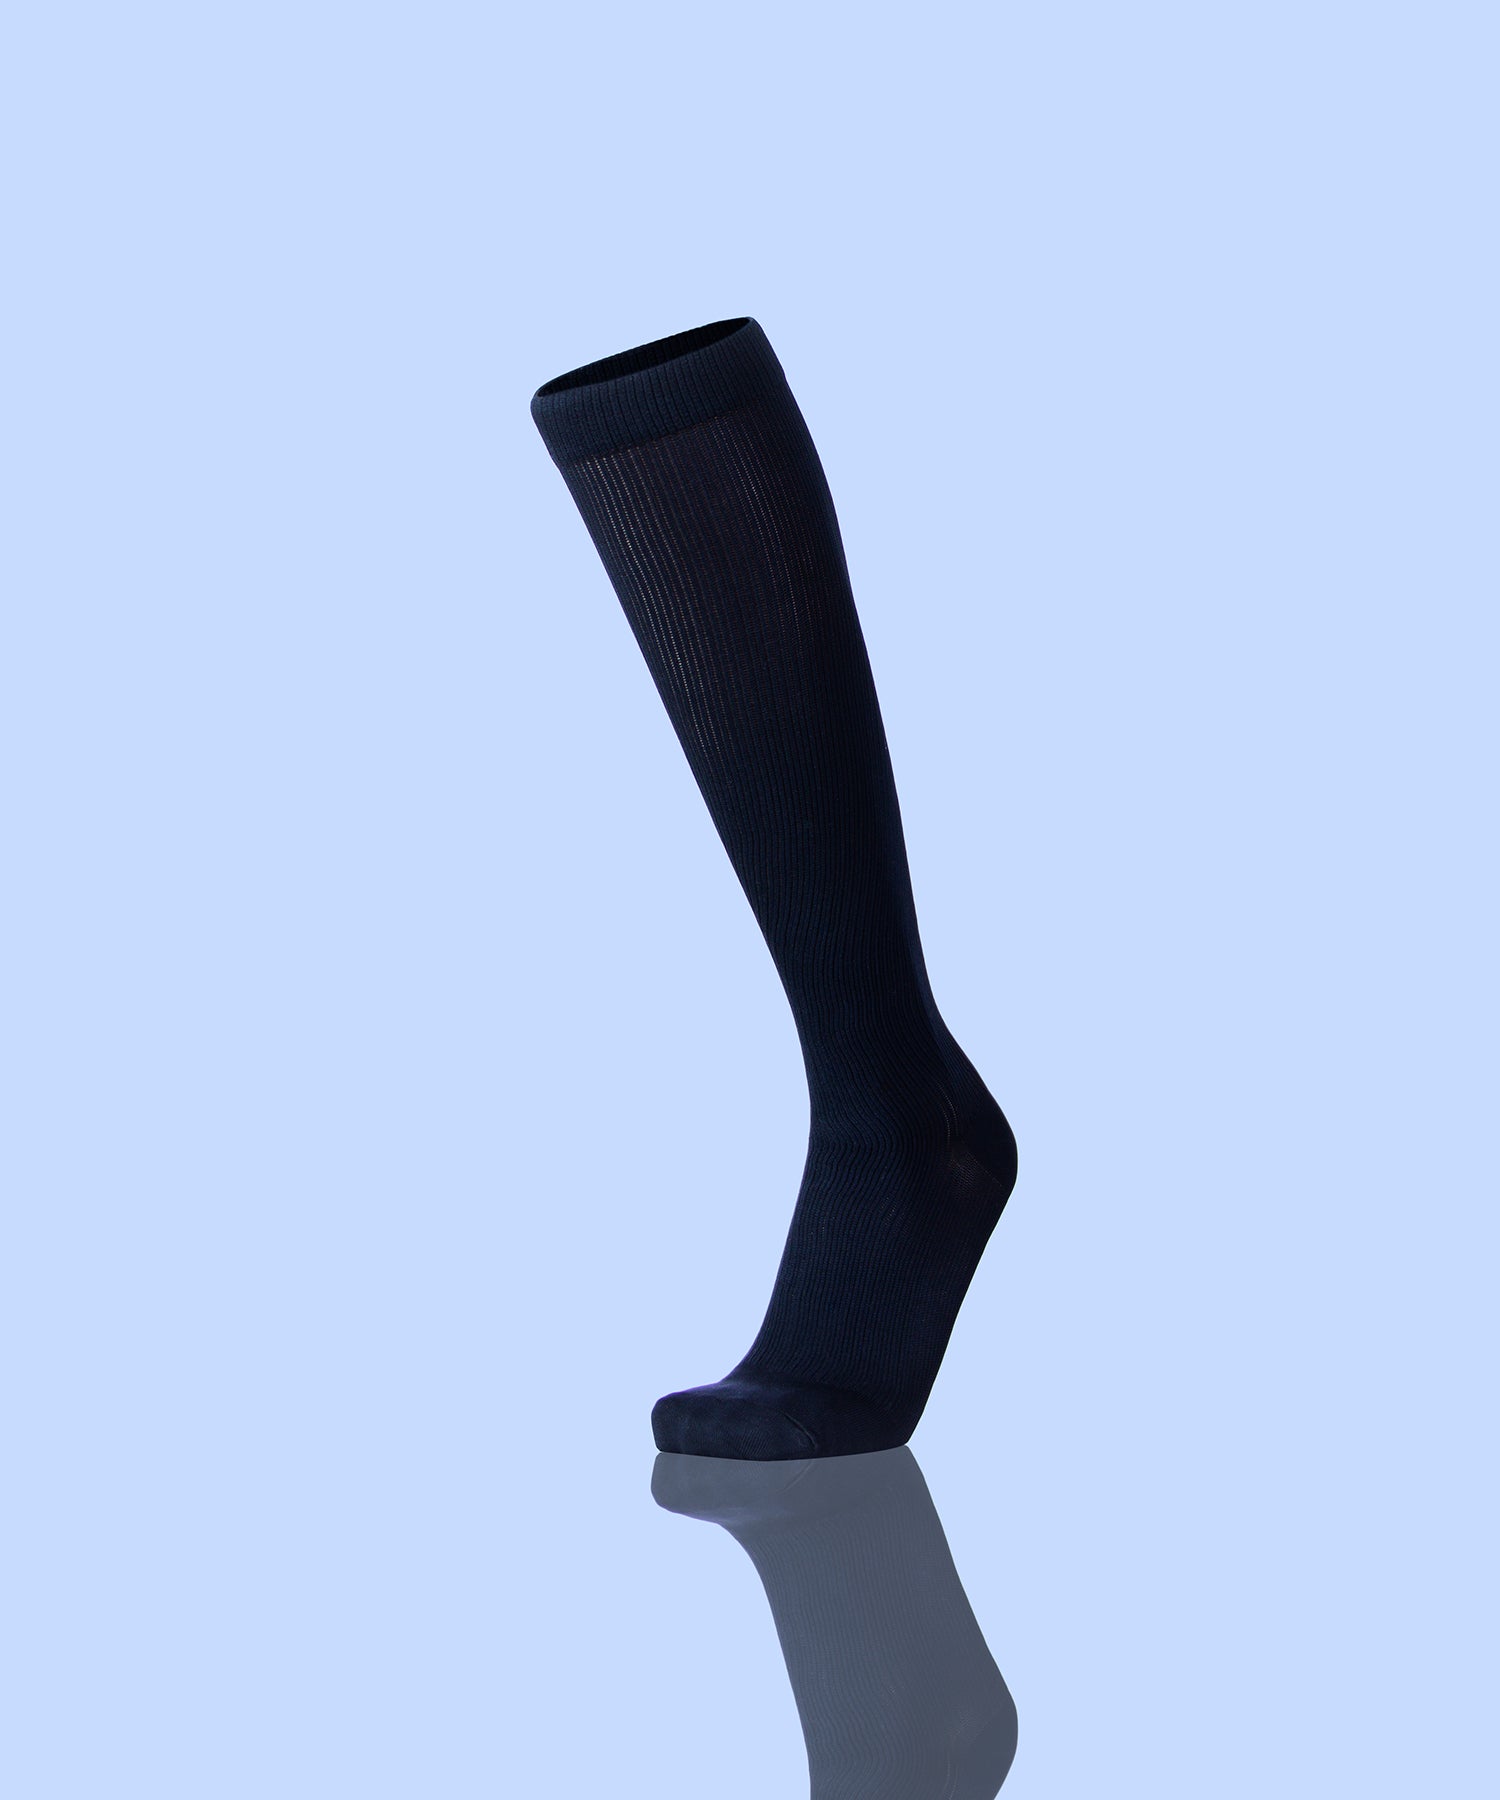 Compression Socks For Men - With Regular Socks Look  - In Black With Light Blue Background